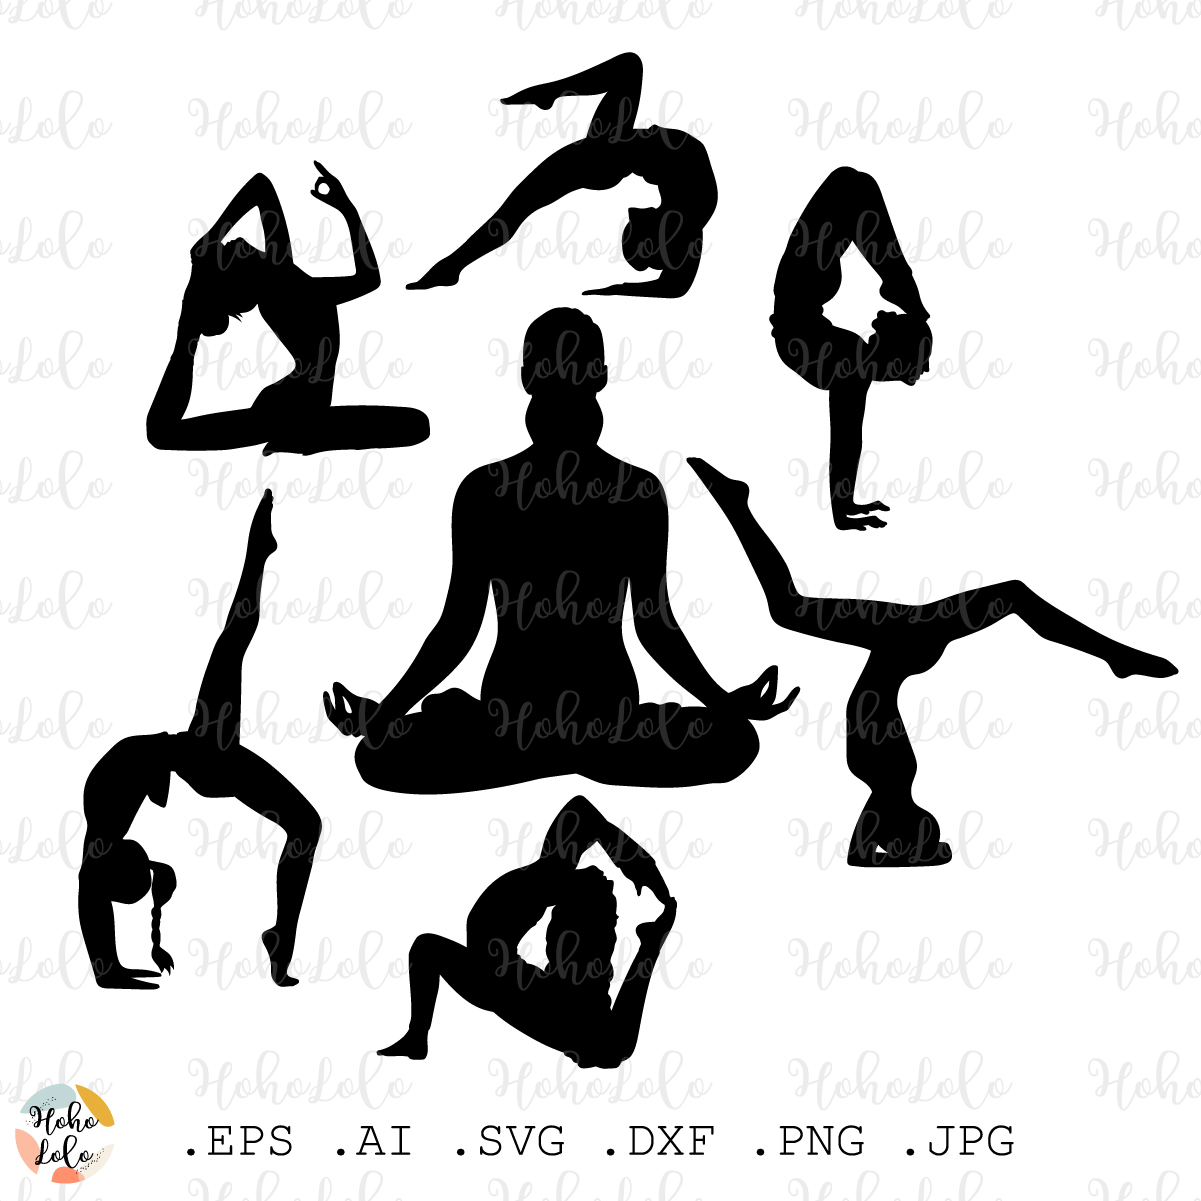 man yoga pose png – Free Vectors, Illustrations & PSD Downloads | Image  Sarovar